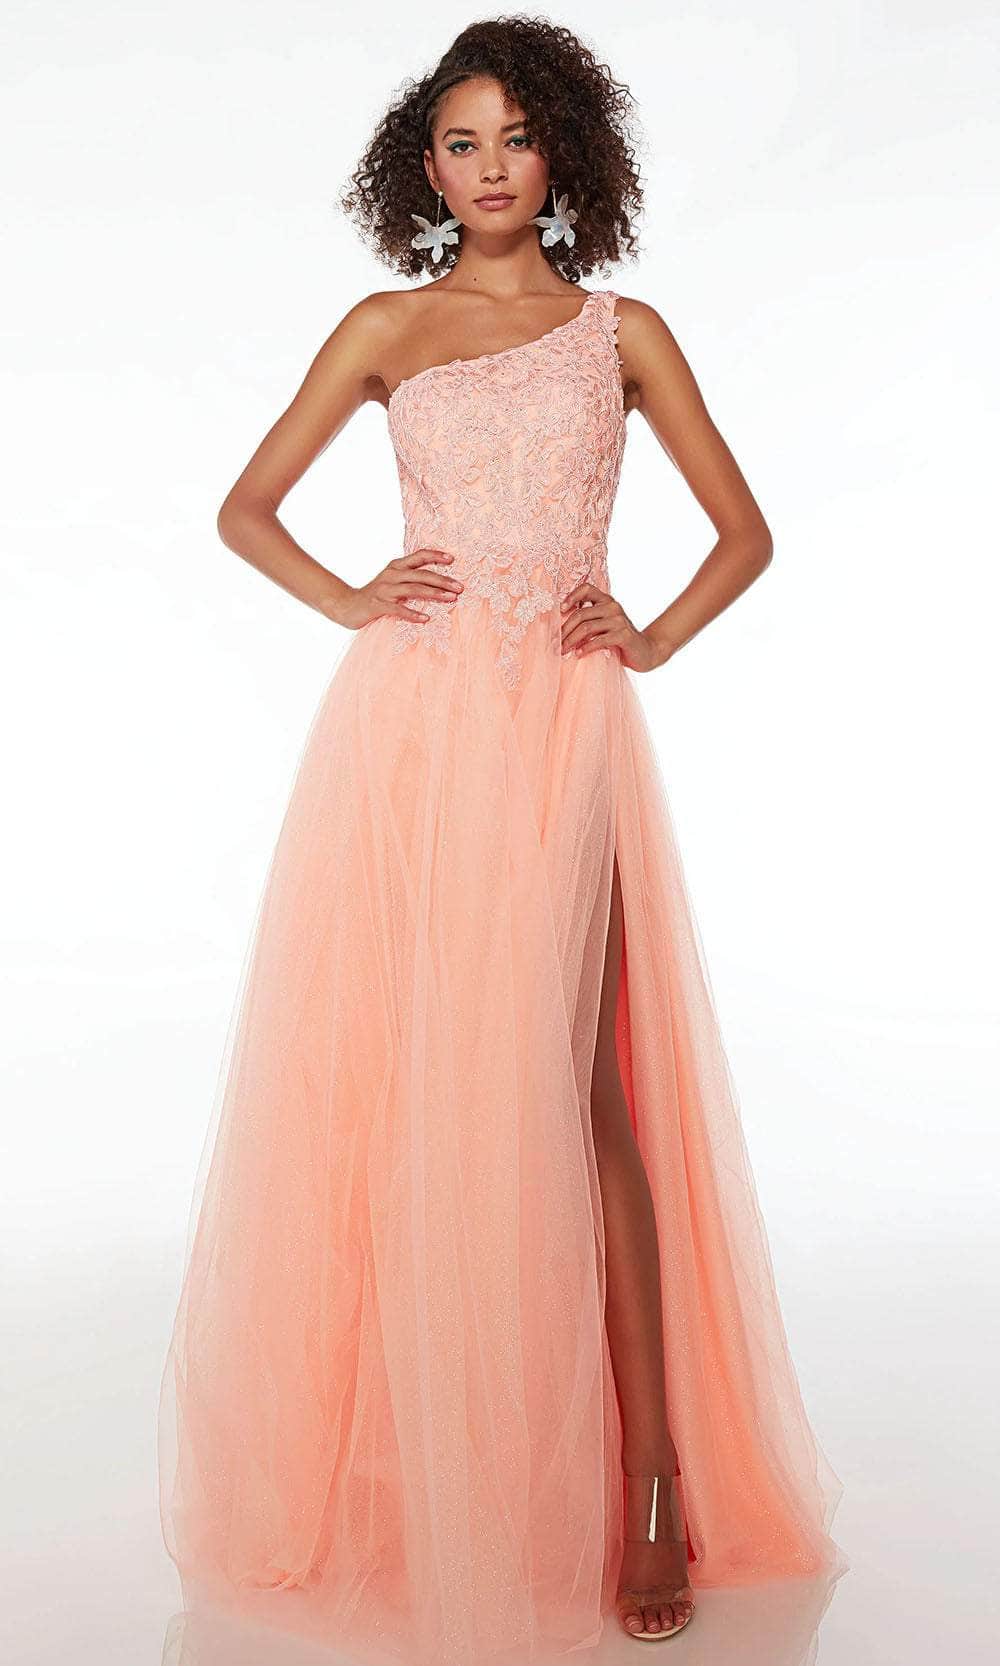 Image of Alyce Paris 61624 - Lace Appliqued Asymmetric Prom Gown